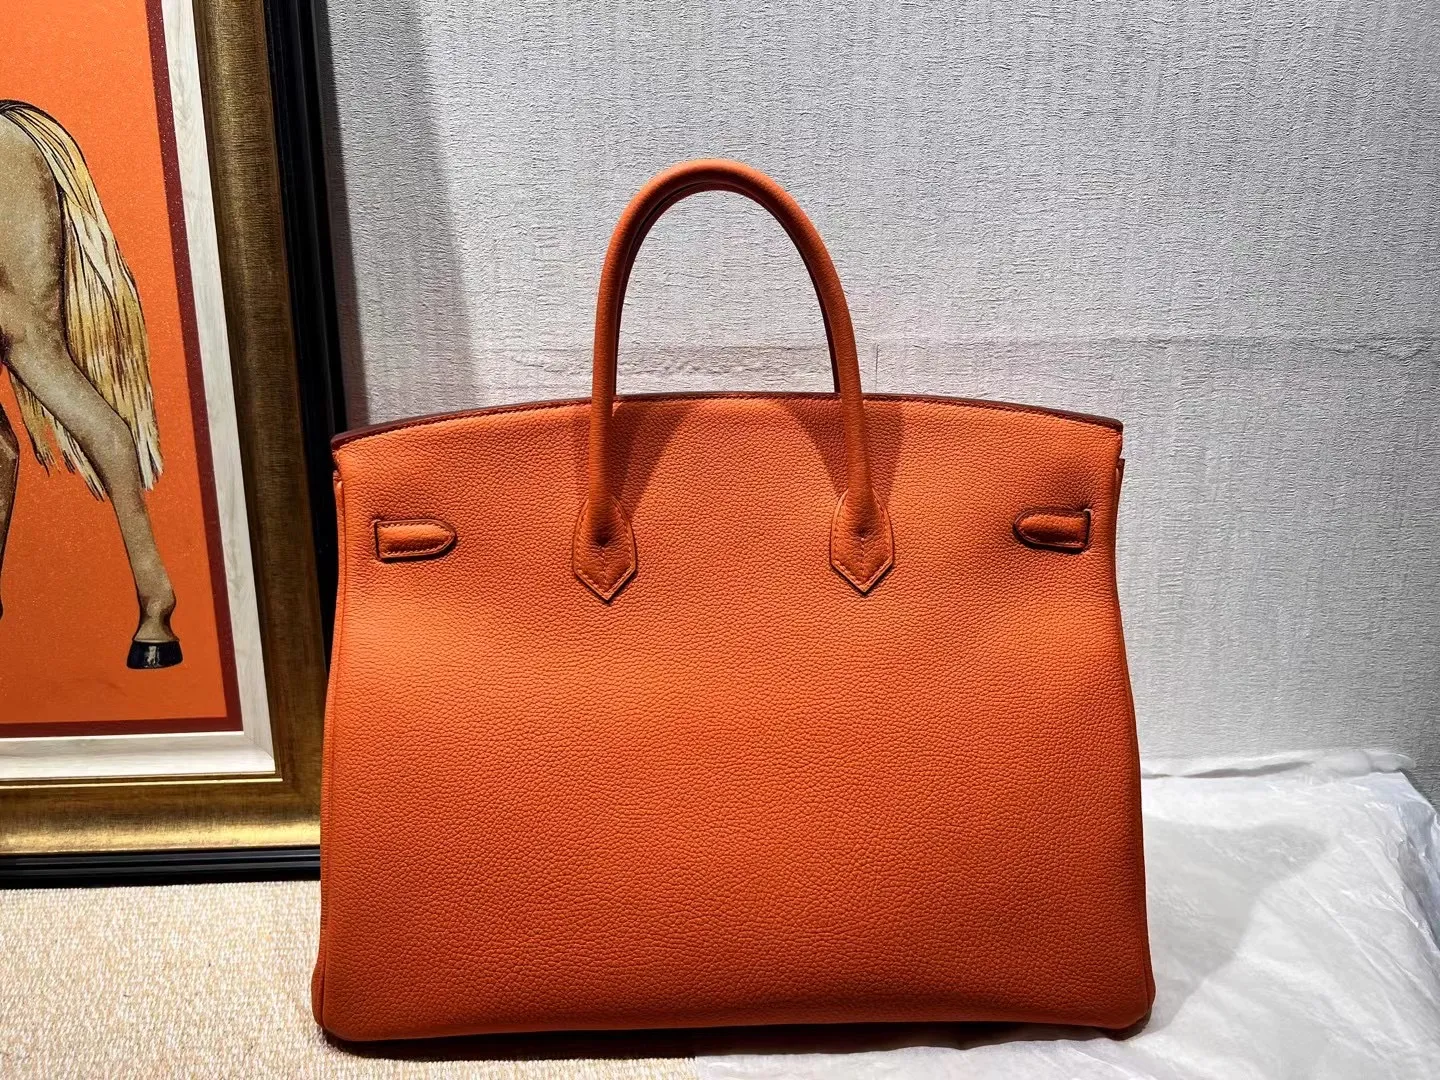 10A Luxury handbag Brand design all hand-made wax thread sewn togo Leather women's handbag 40cm cowhide bag Large capacity travel bag